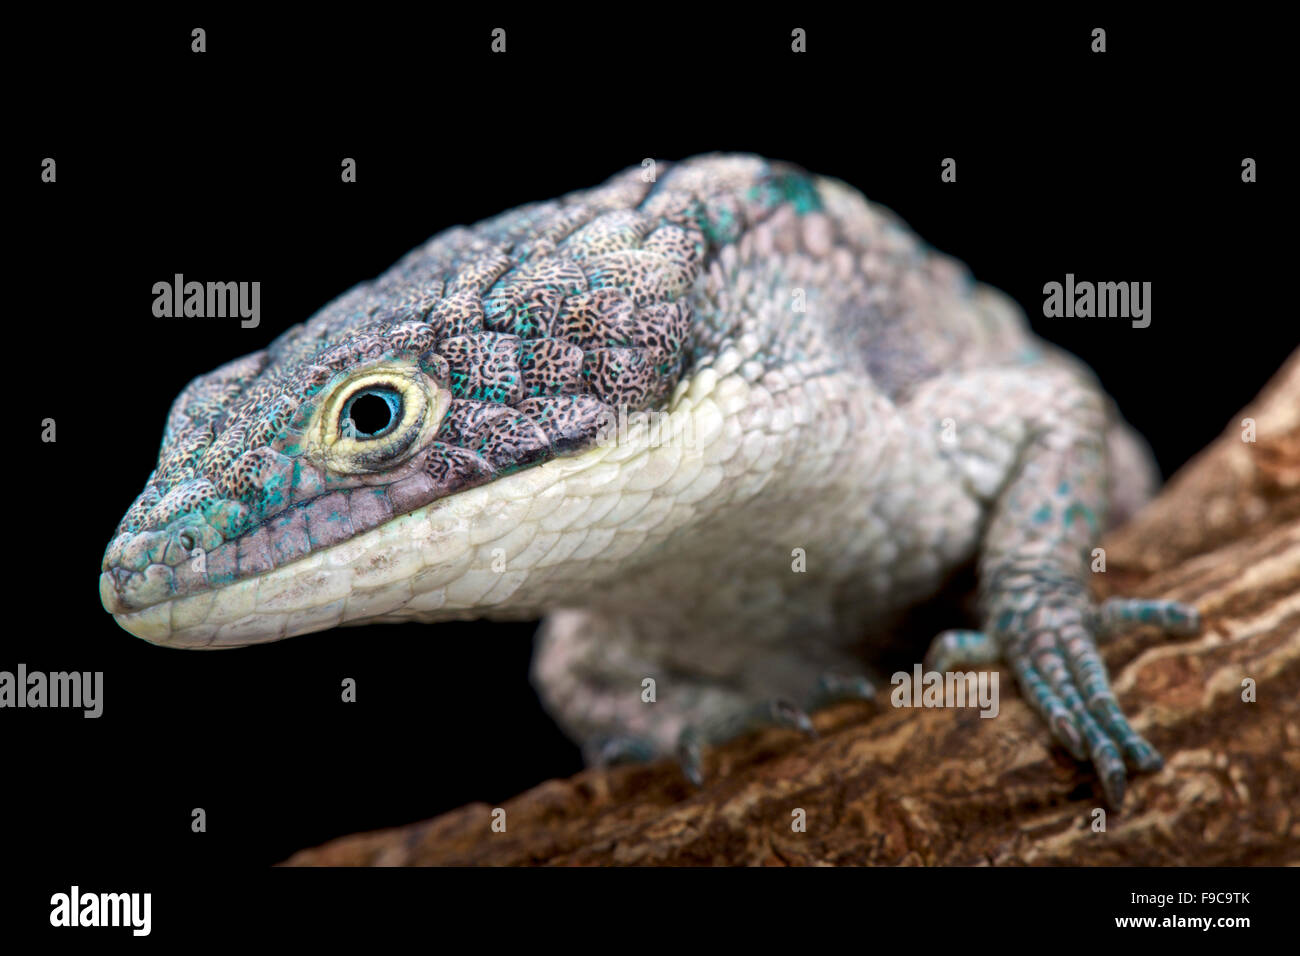 Arboreal alligator lizard (Abronia graminea) Stock Photo